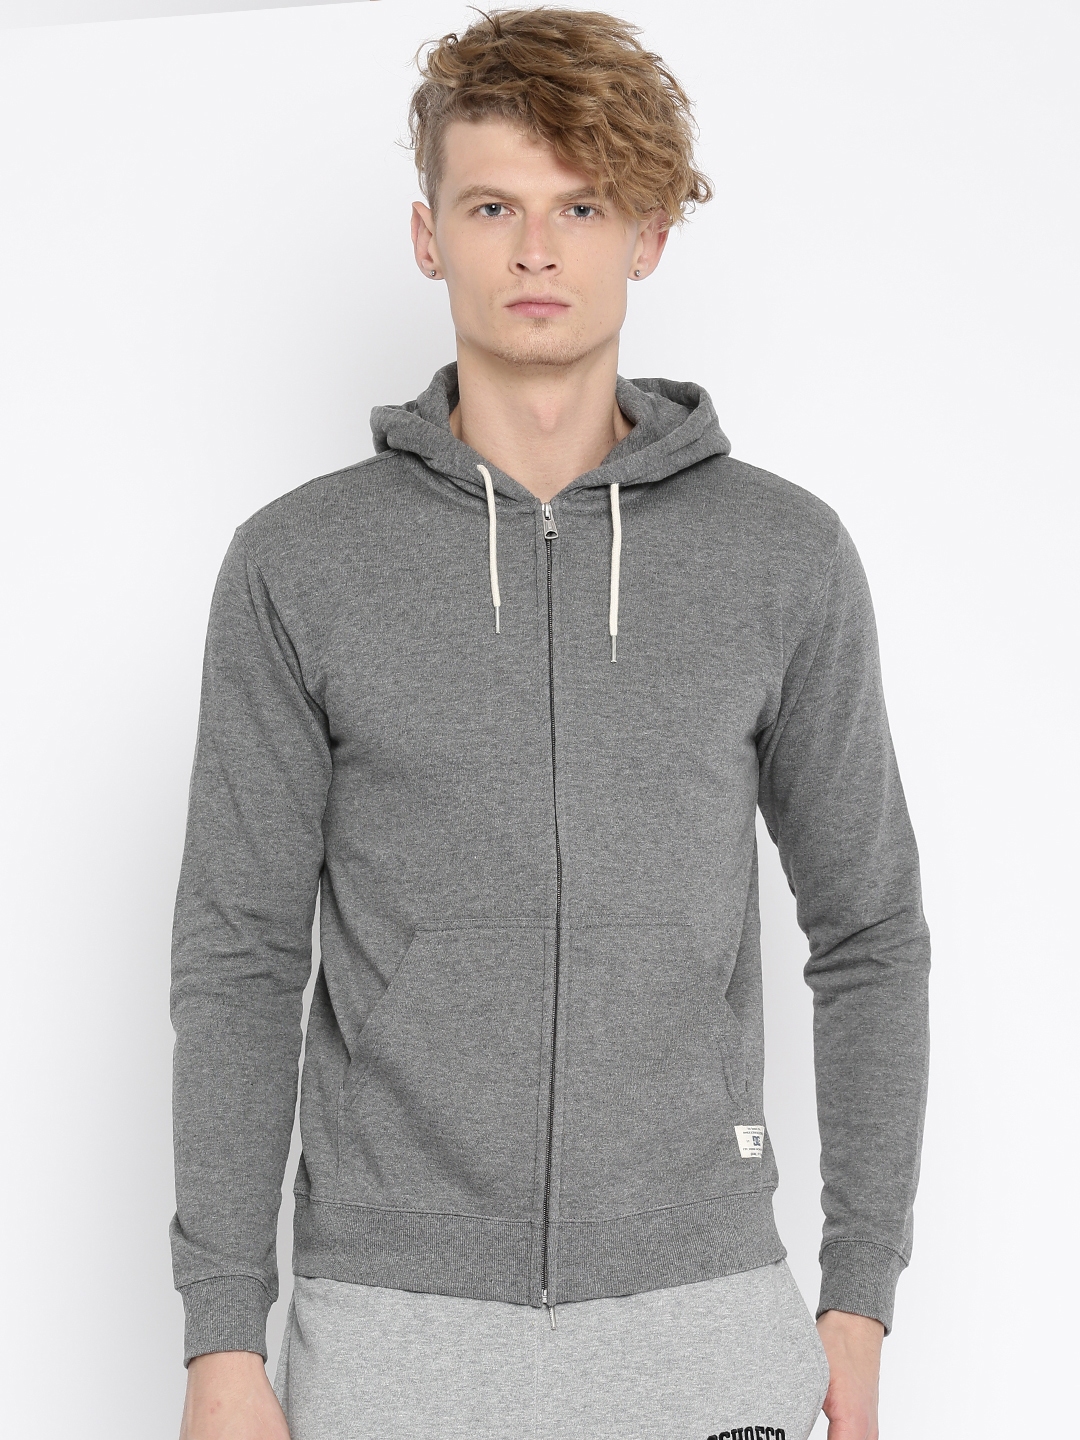 Buy DC Grey Melange Hooded Sweatshirt - Sweatshirts for Men 1548452 ...